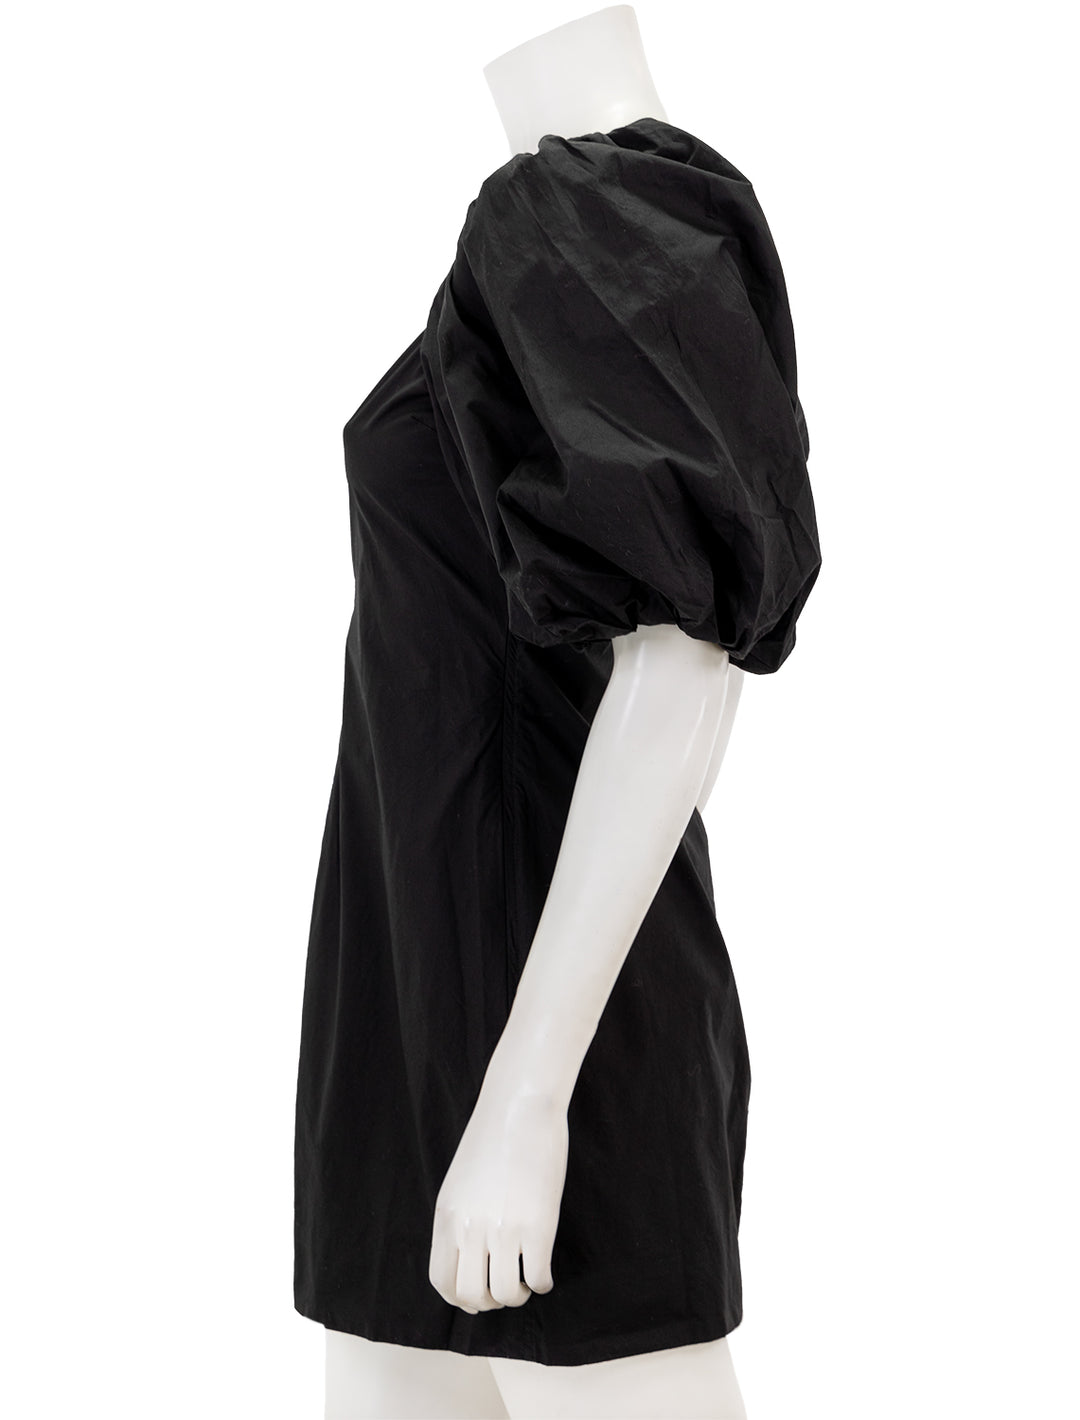 Side view of GANNI's cotton poplin twisted sleeve mini dress in black.